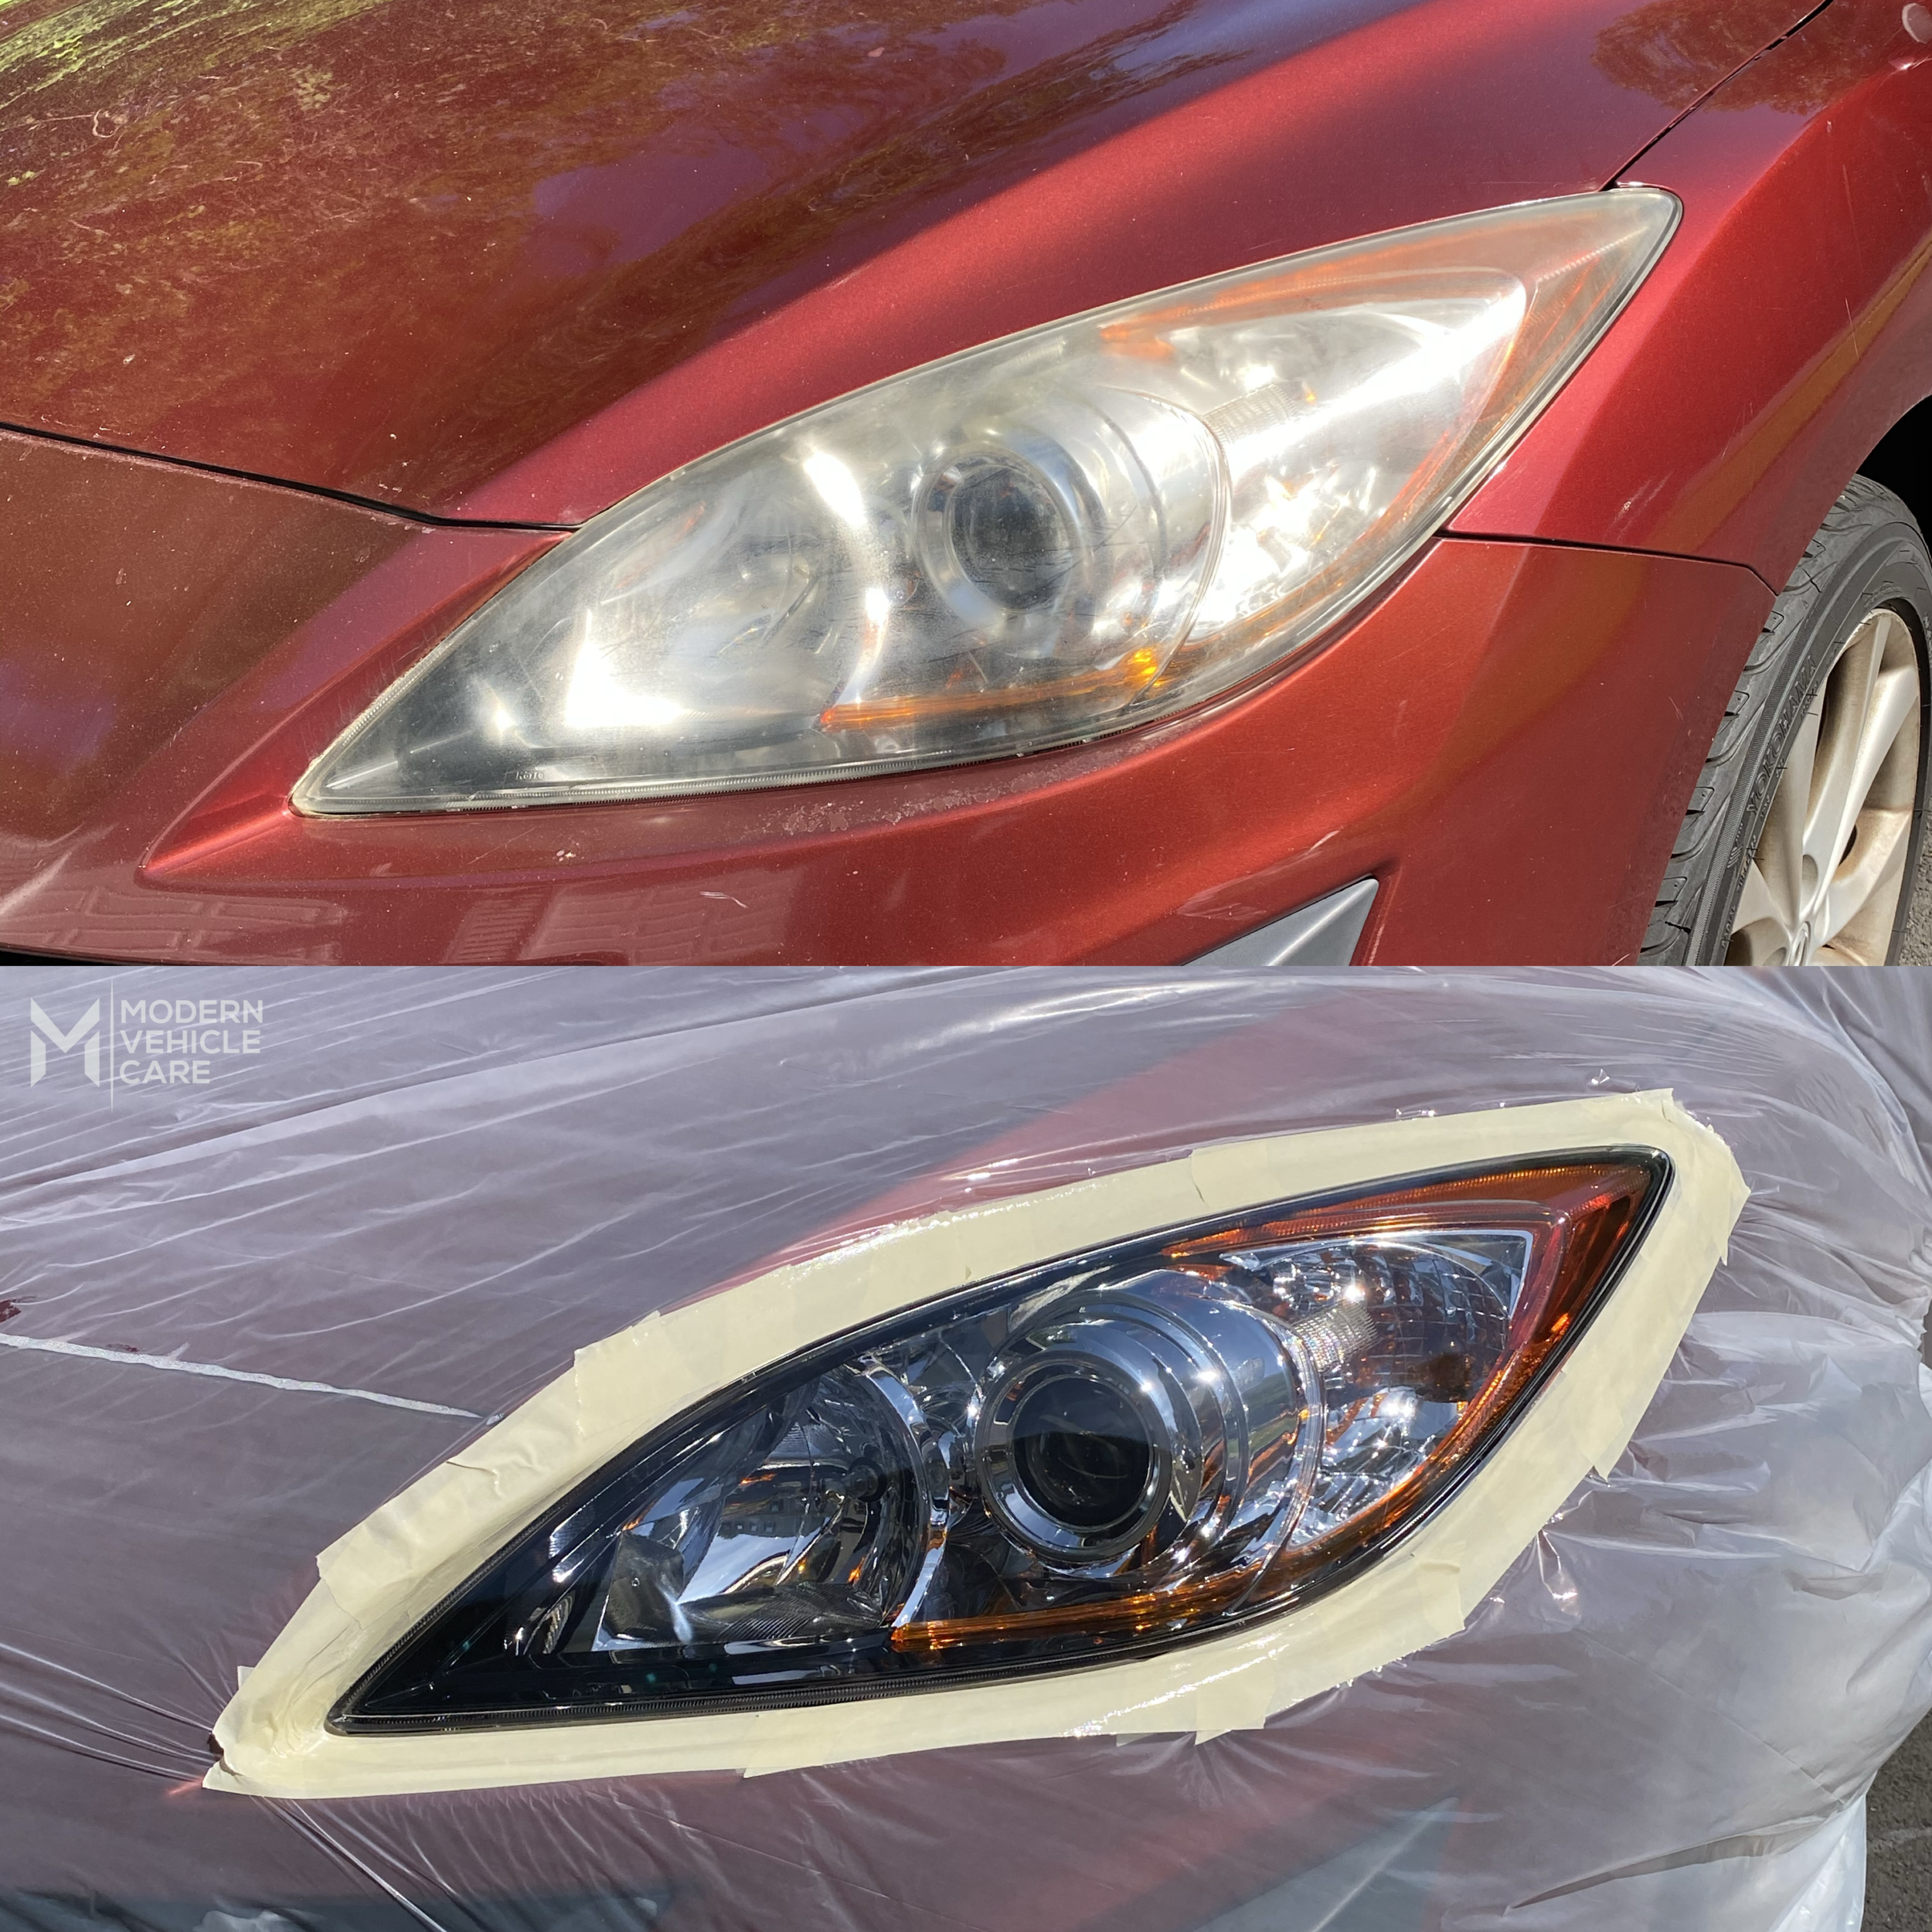 Modern Vehicle Care Mazda Headlight Restoration.PNG